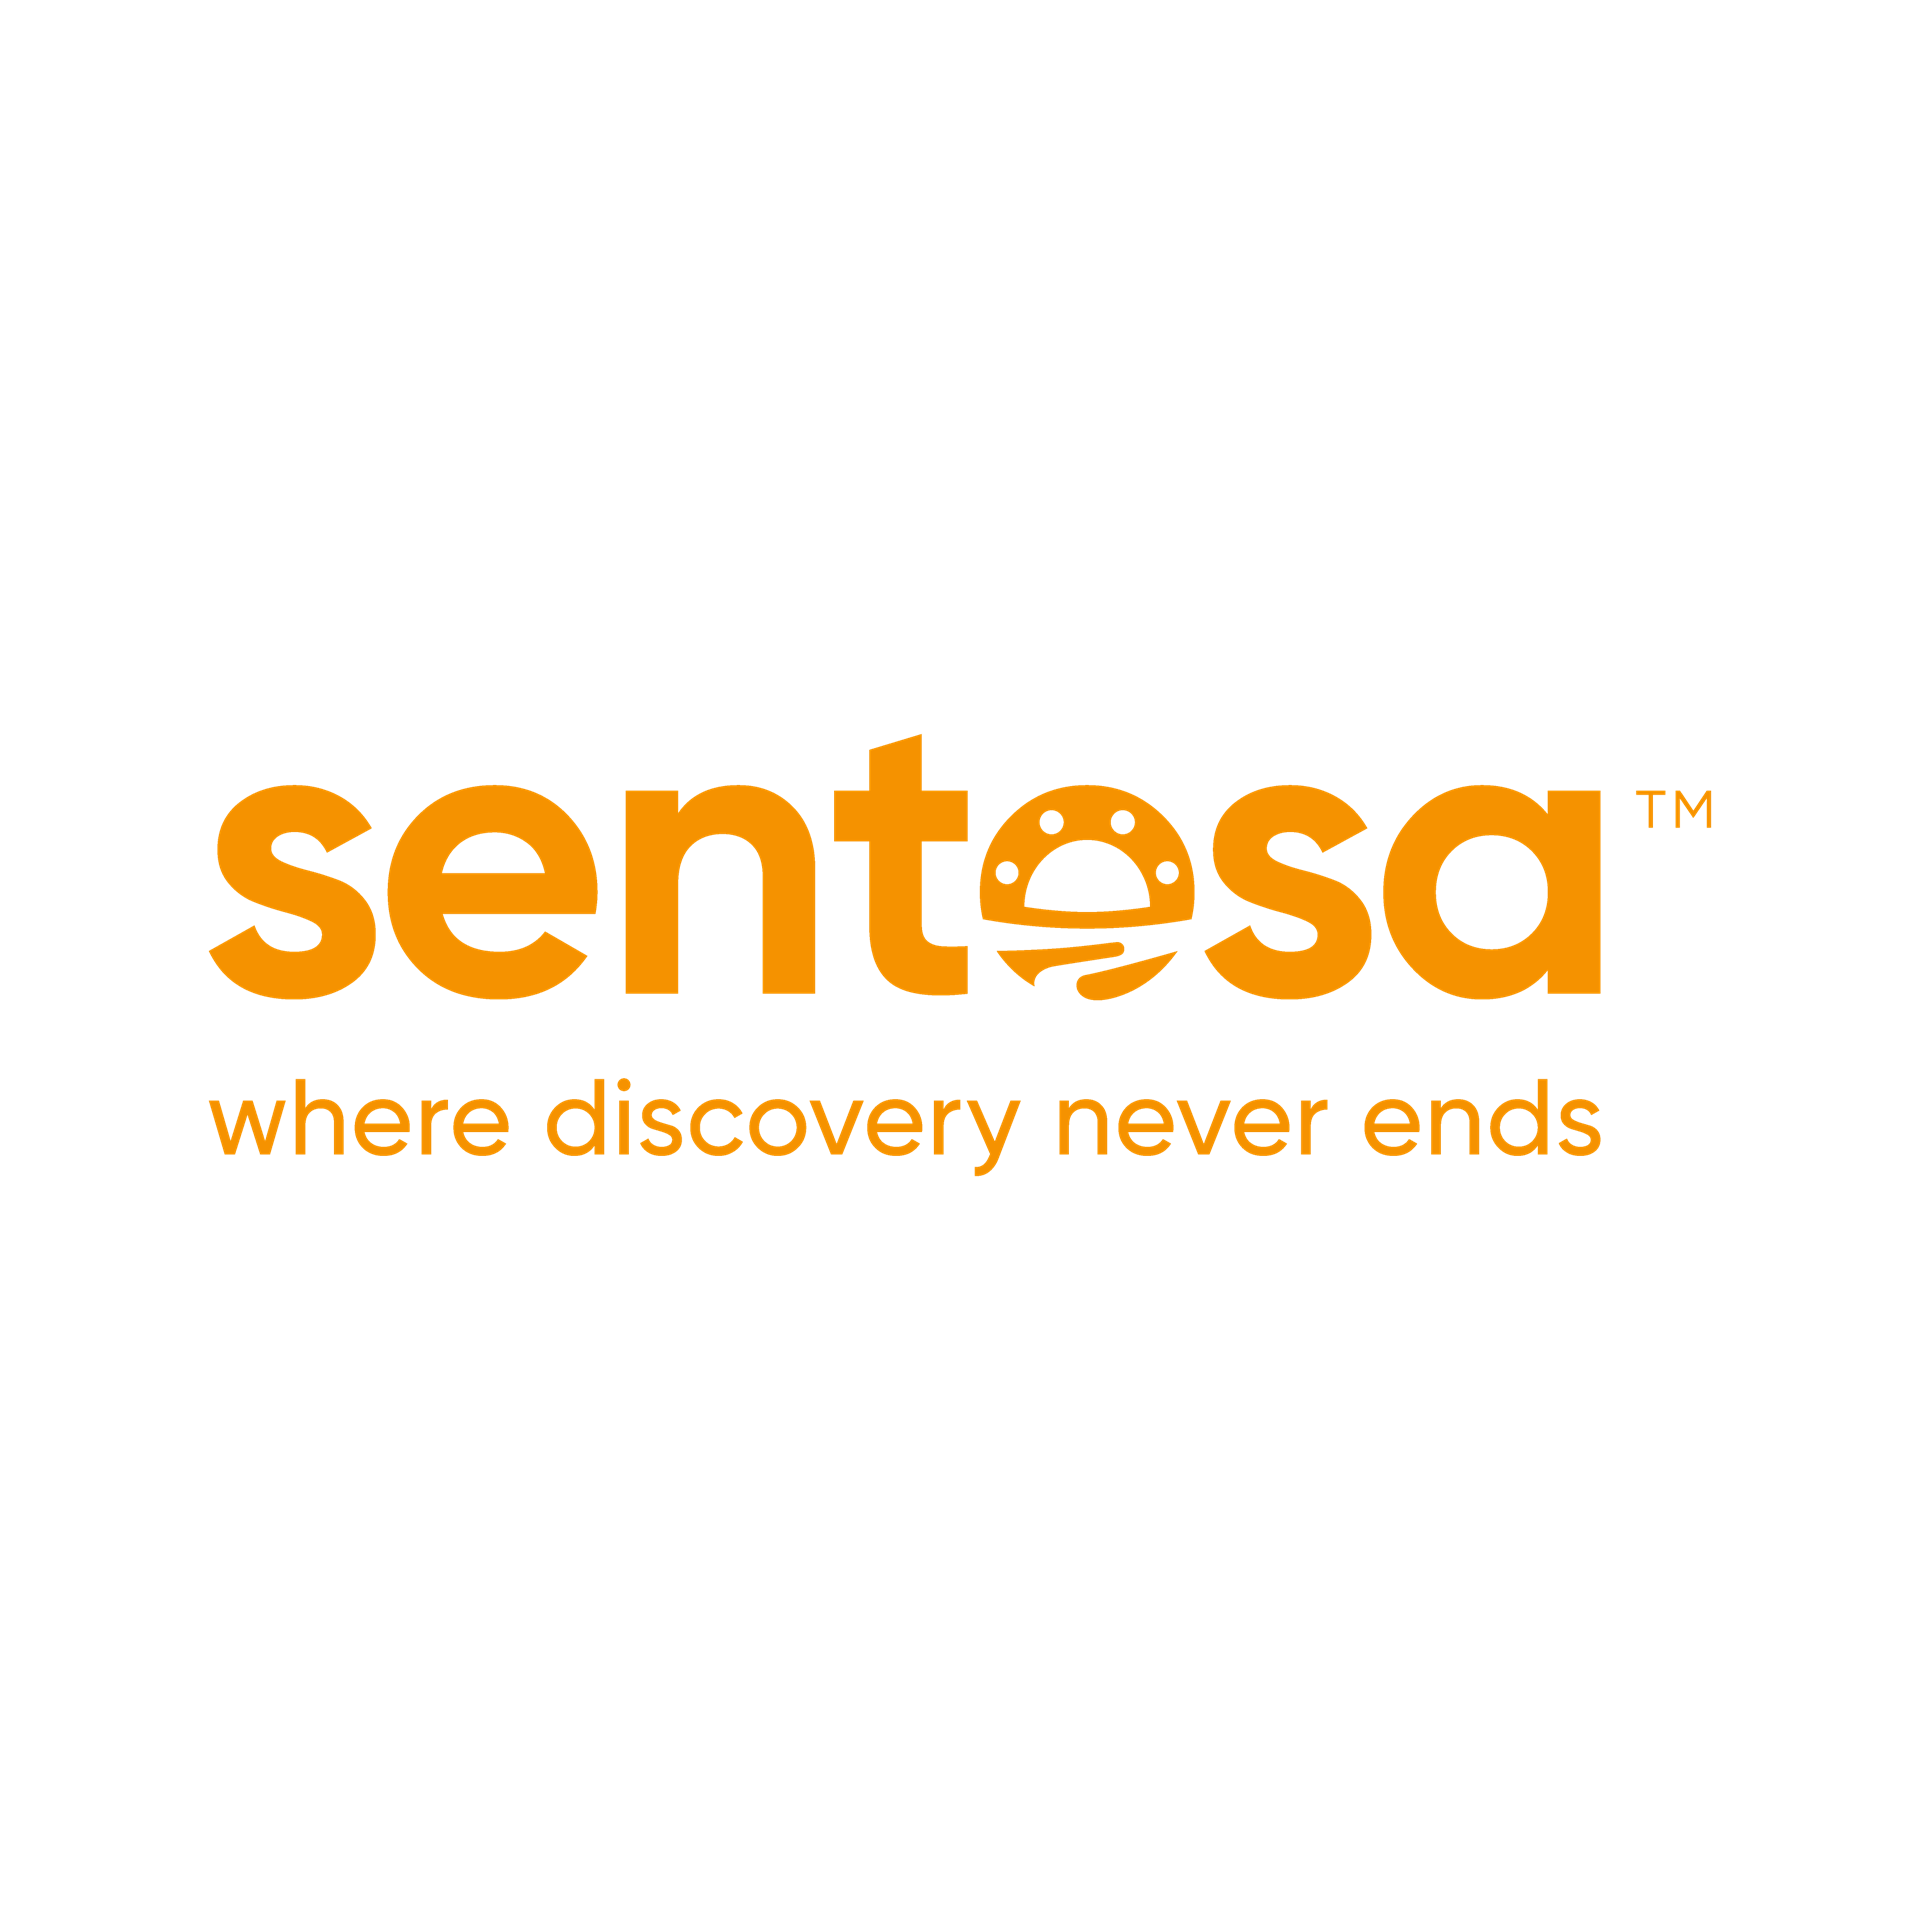 Sentosa, where discovery never ends